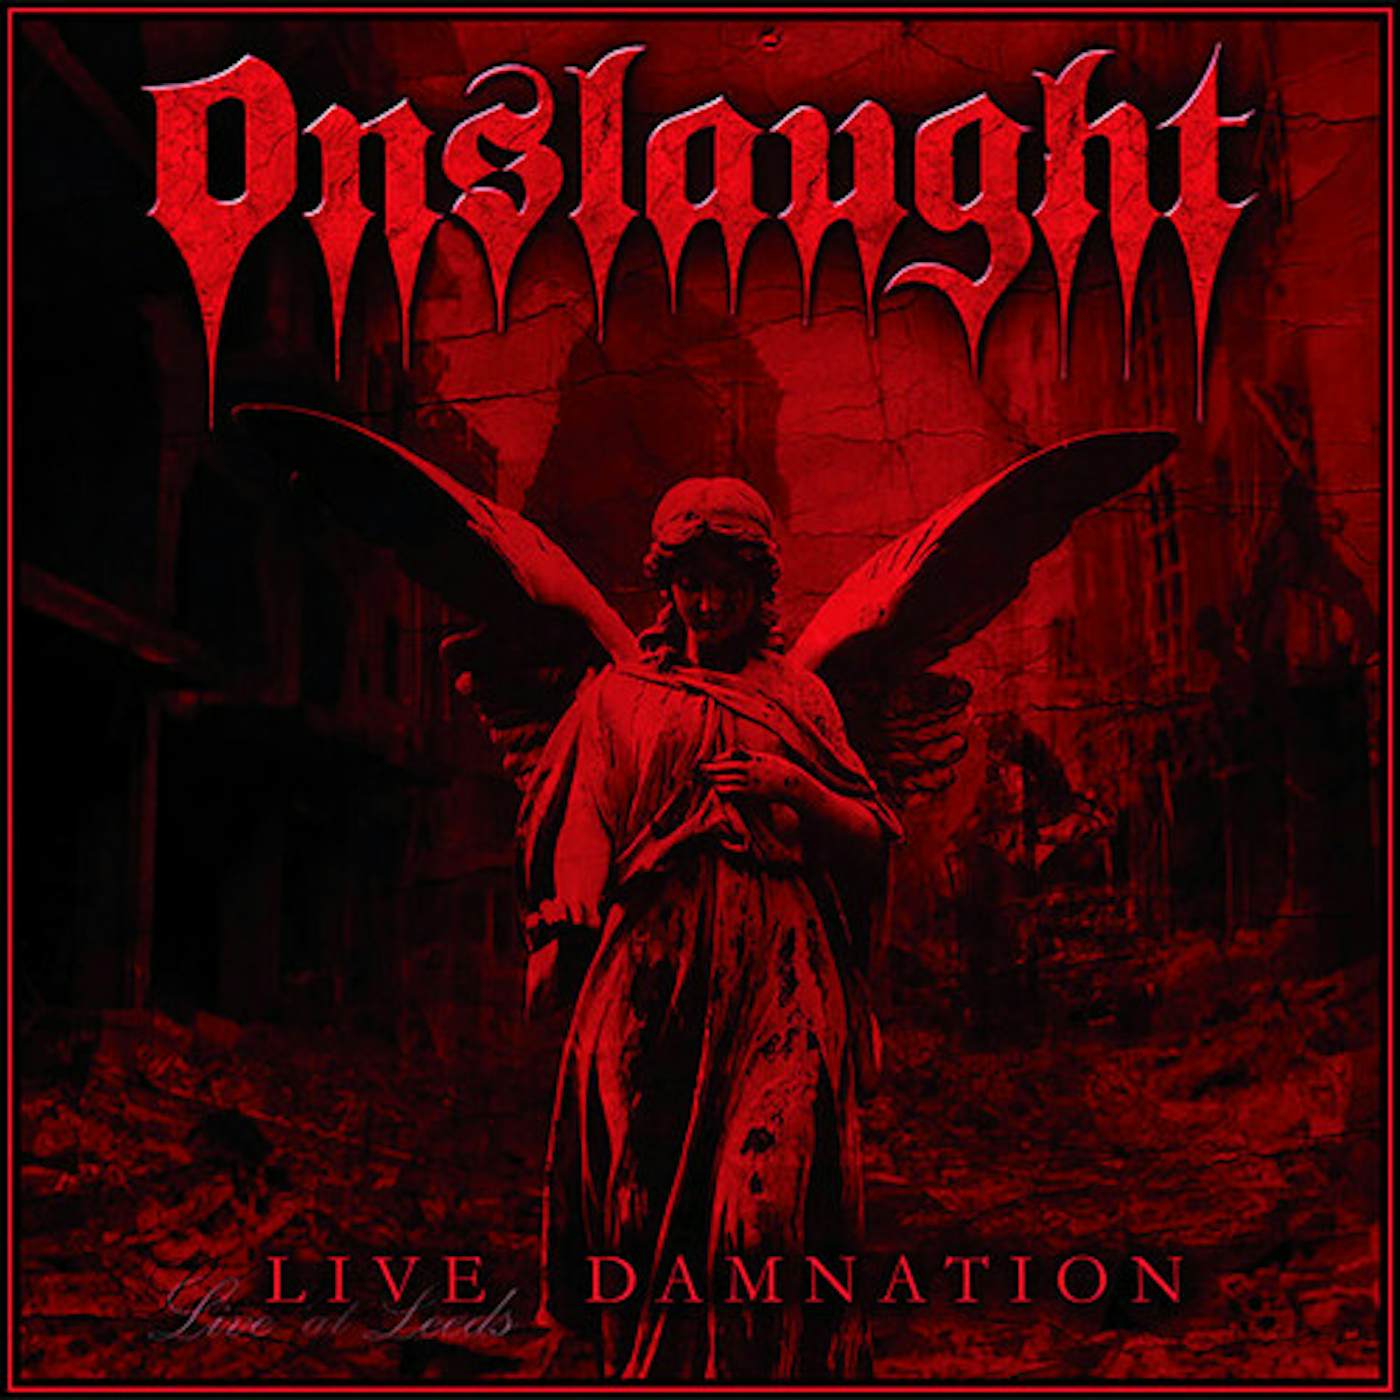 Onslaught Live Damnation Vinyl Record